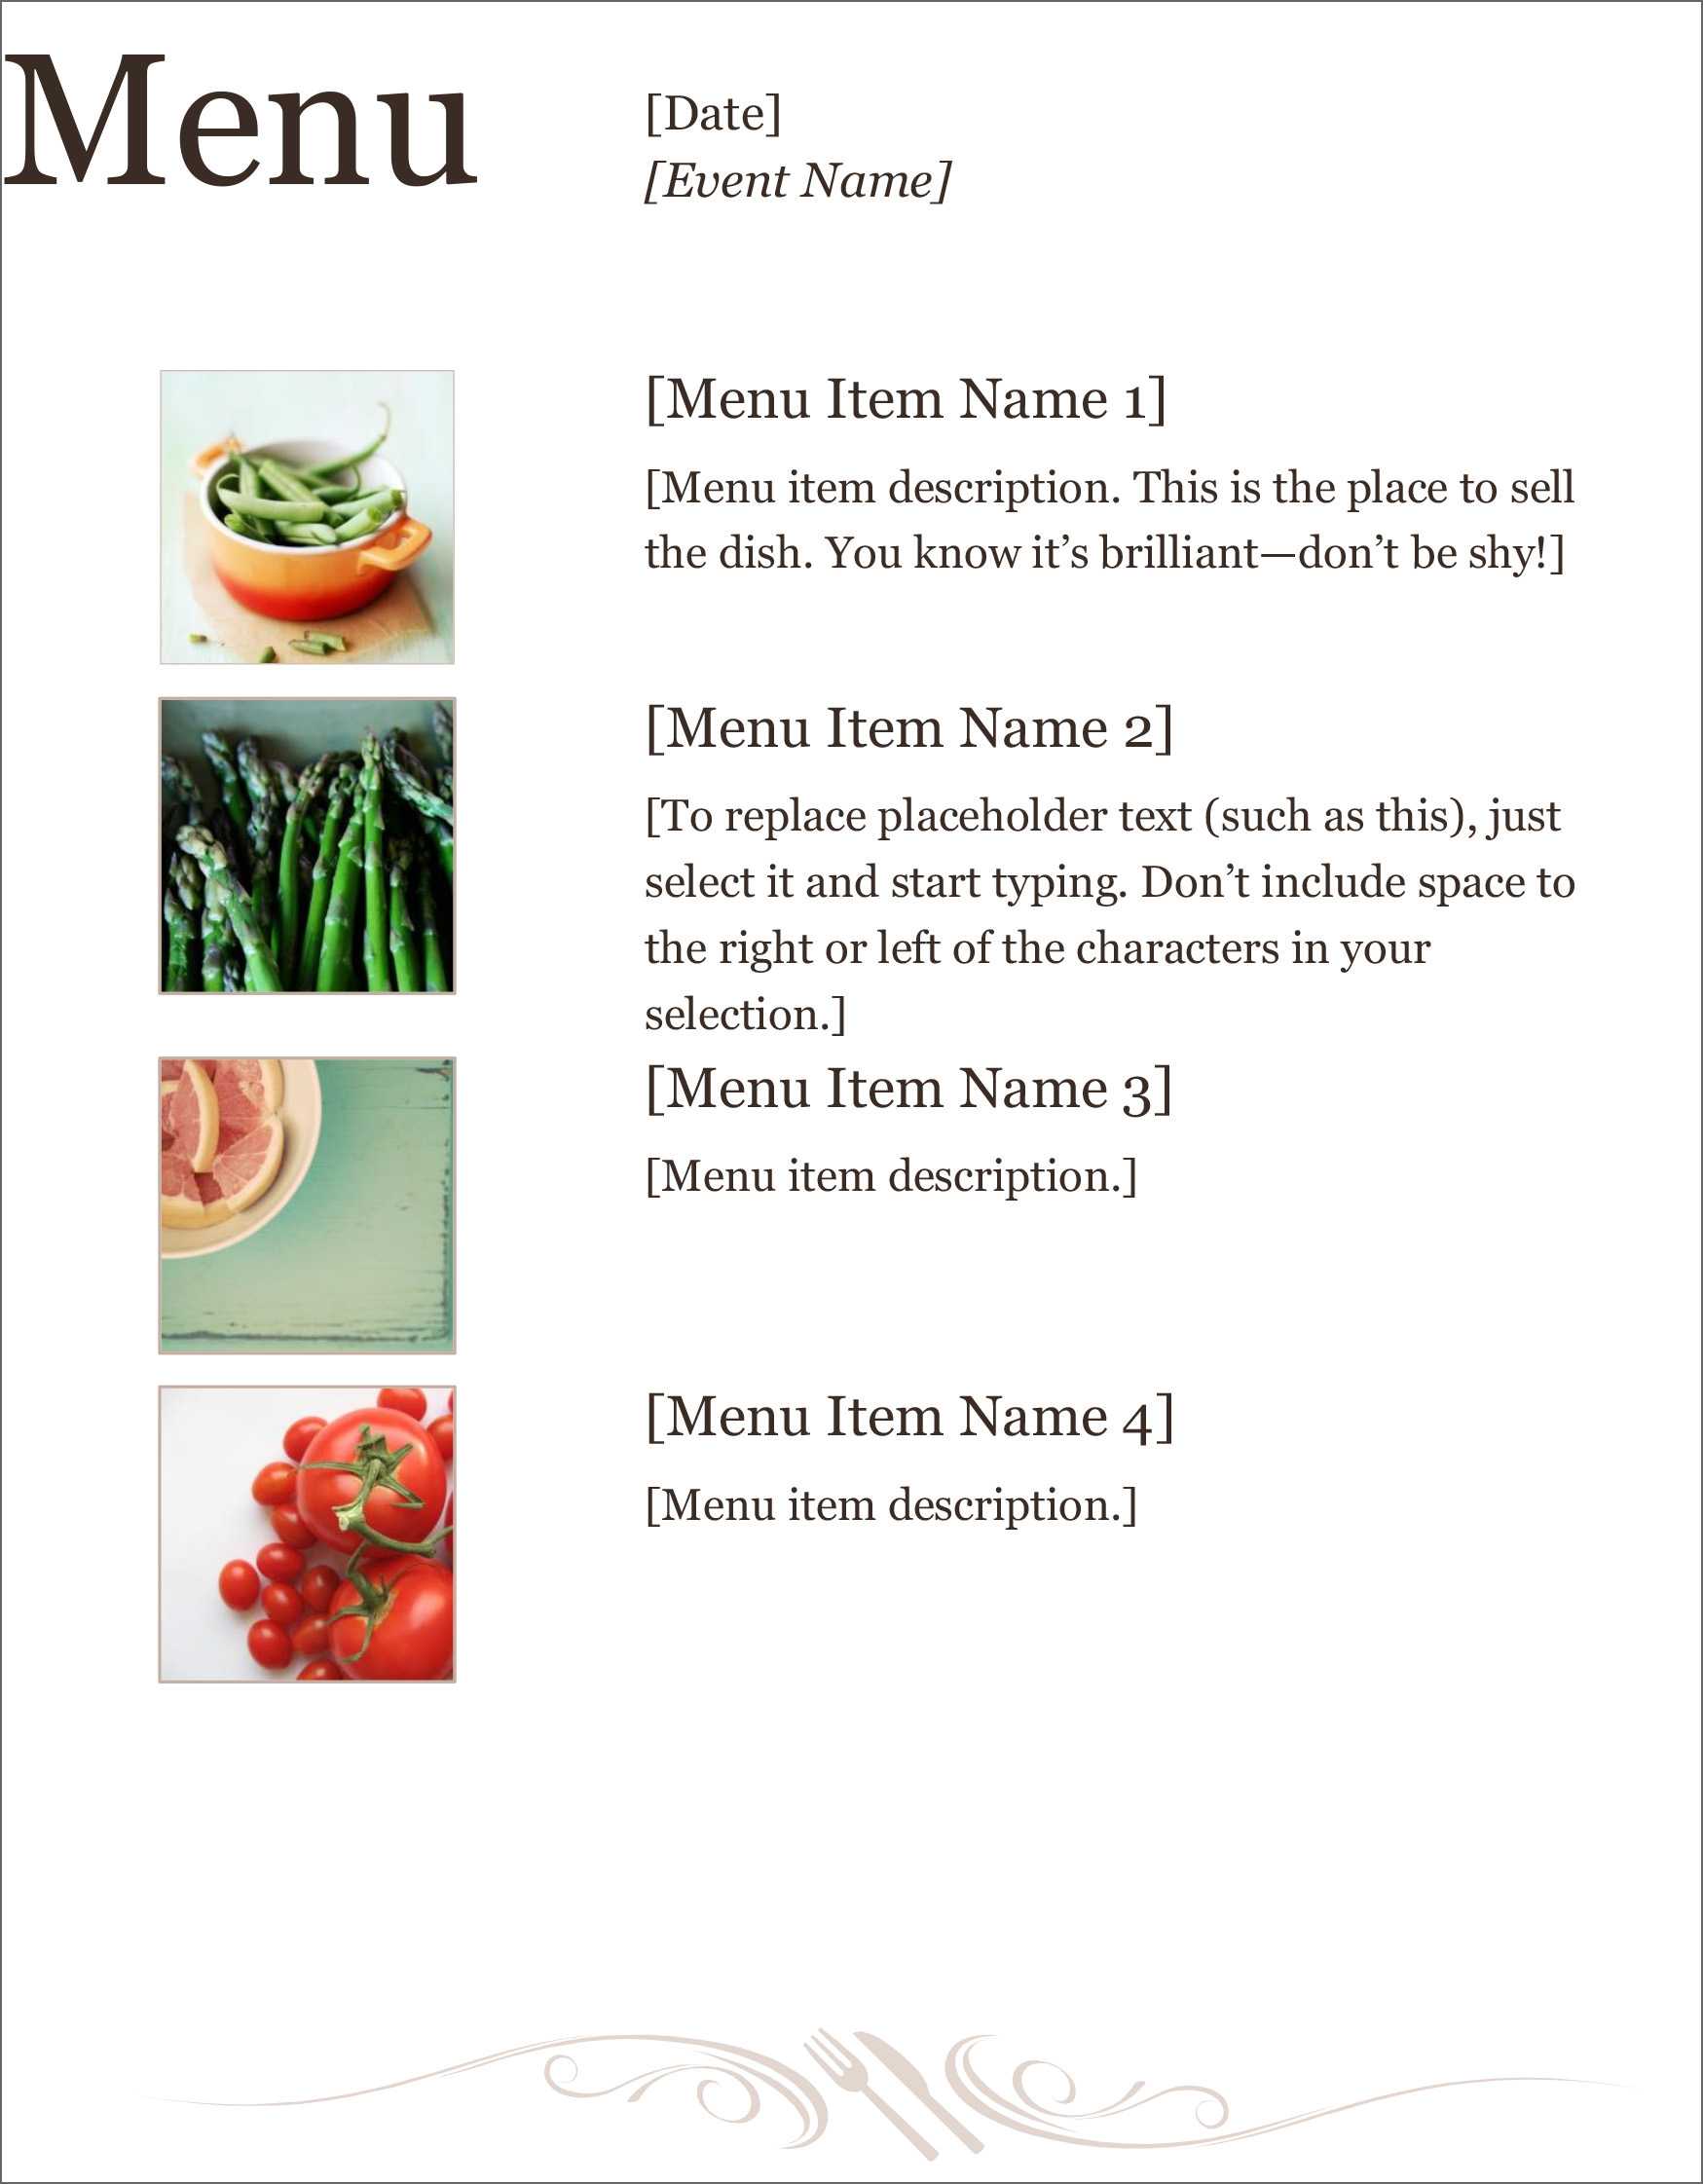 32 Free Simple Menu Templates For Restaurants, Cafes, And Throughout Free Cafe Menu Templates For Word